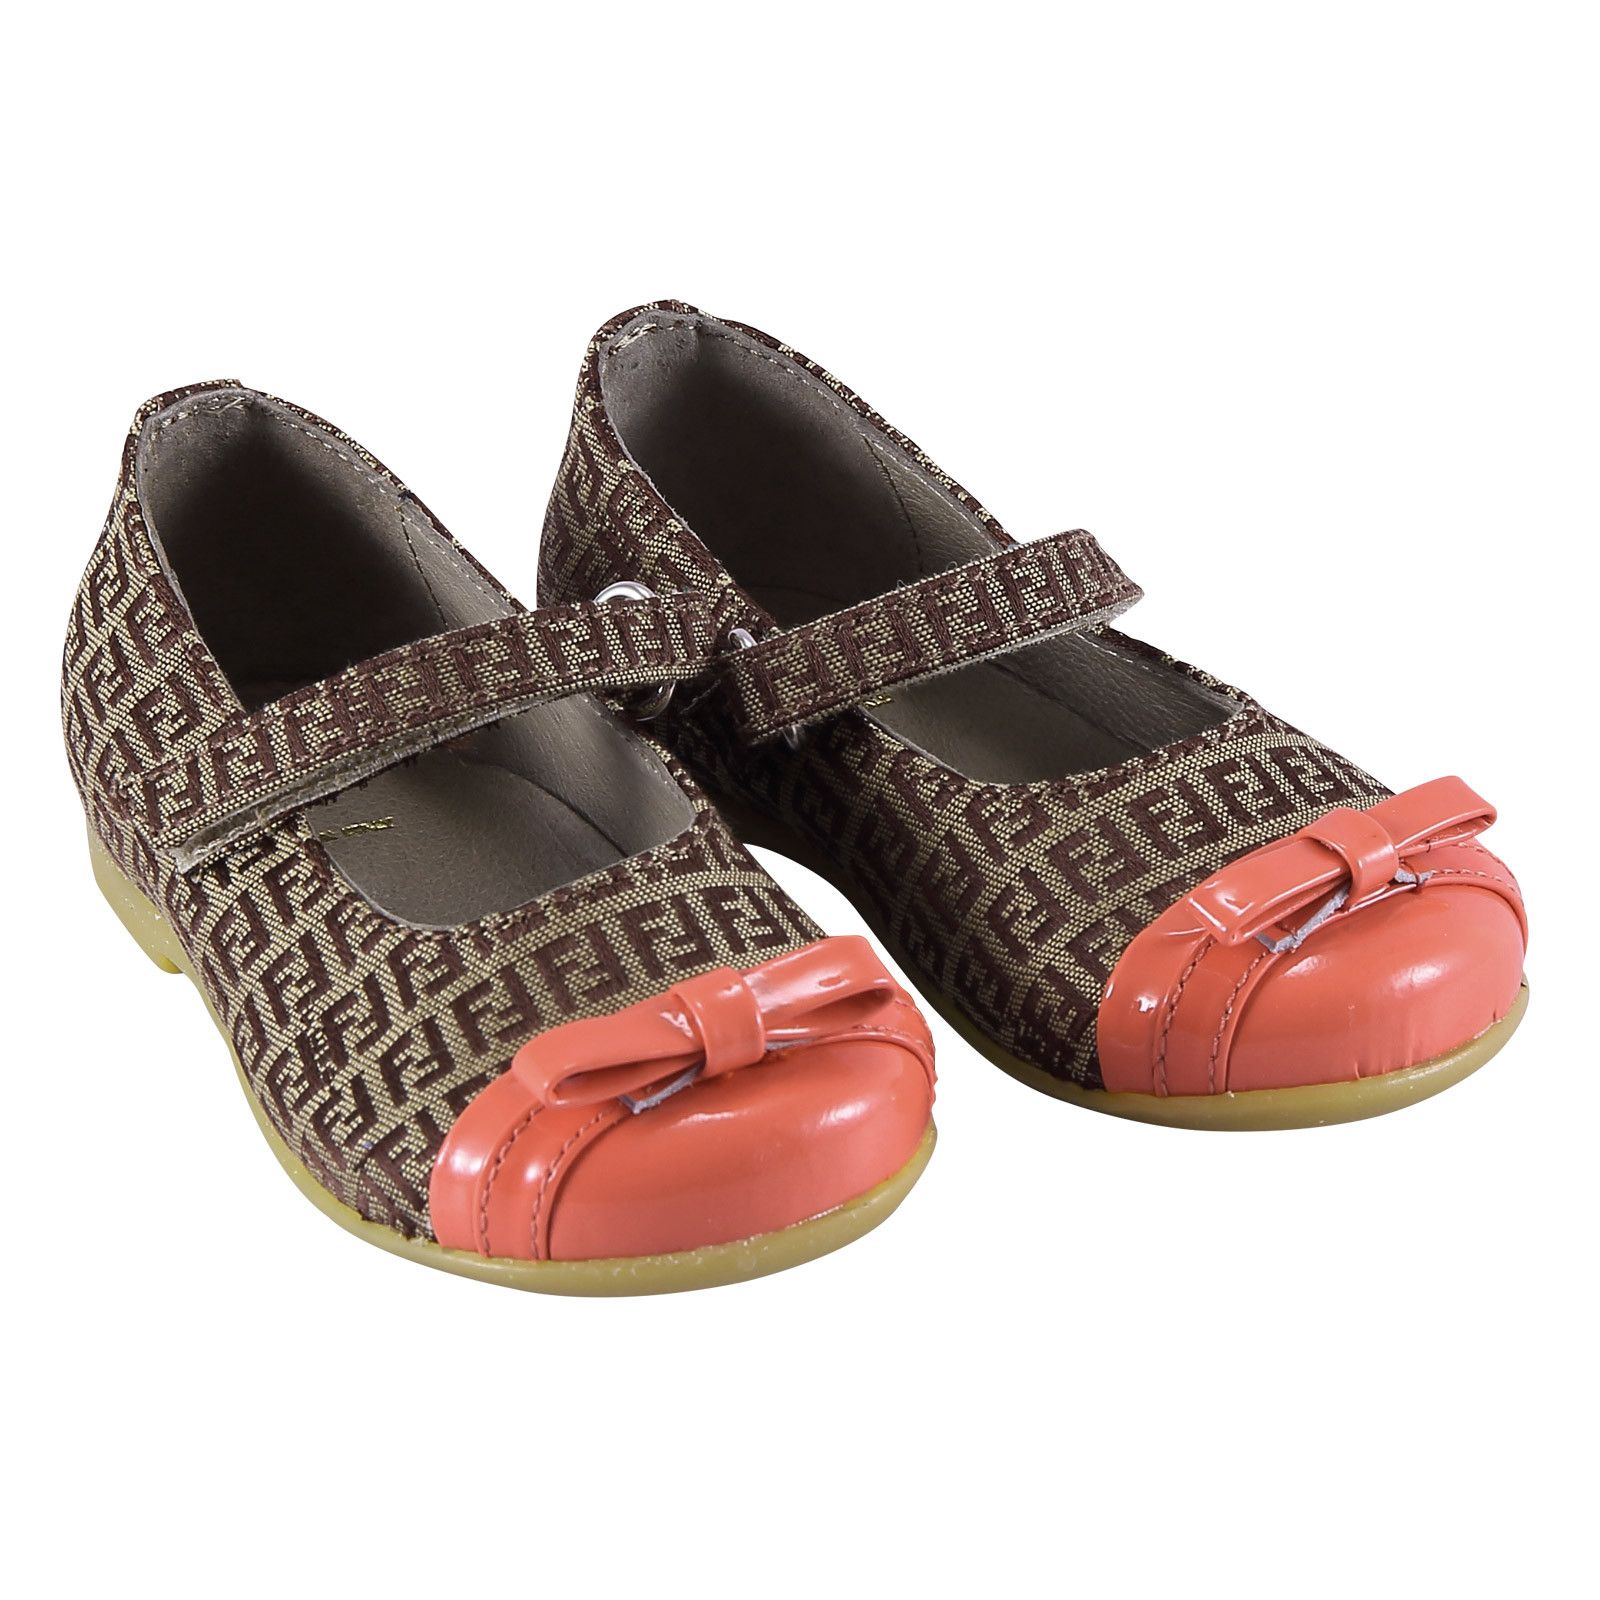 Girls Brown&Pink Shoes - CÉMAROSE | Children's Fashion Store - 1